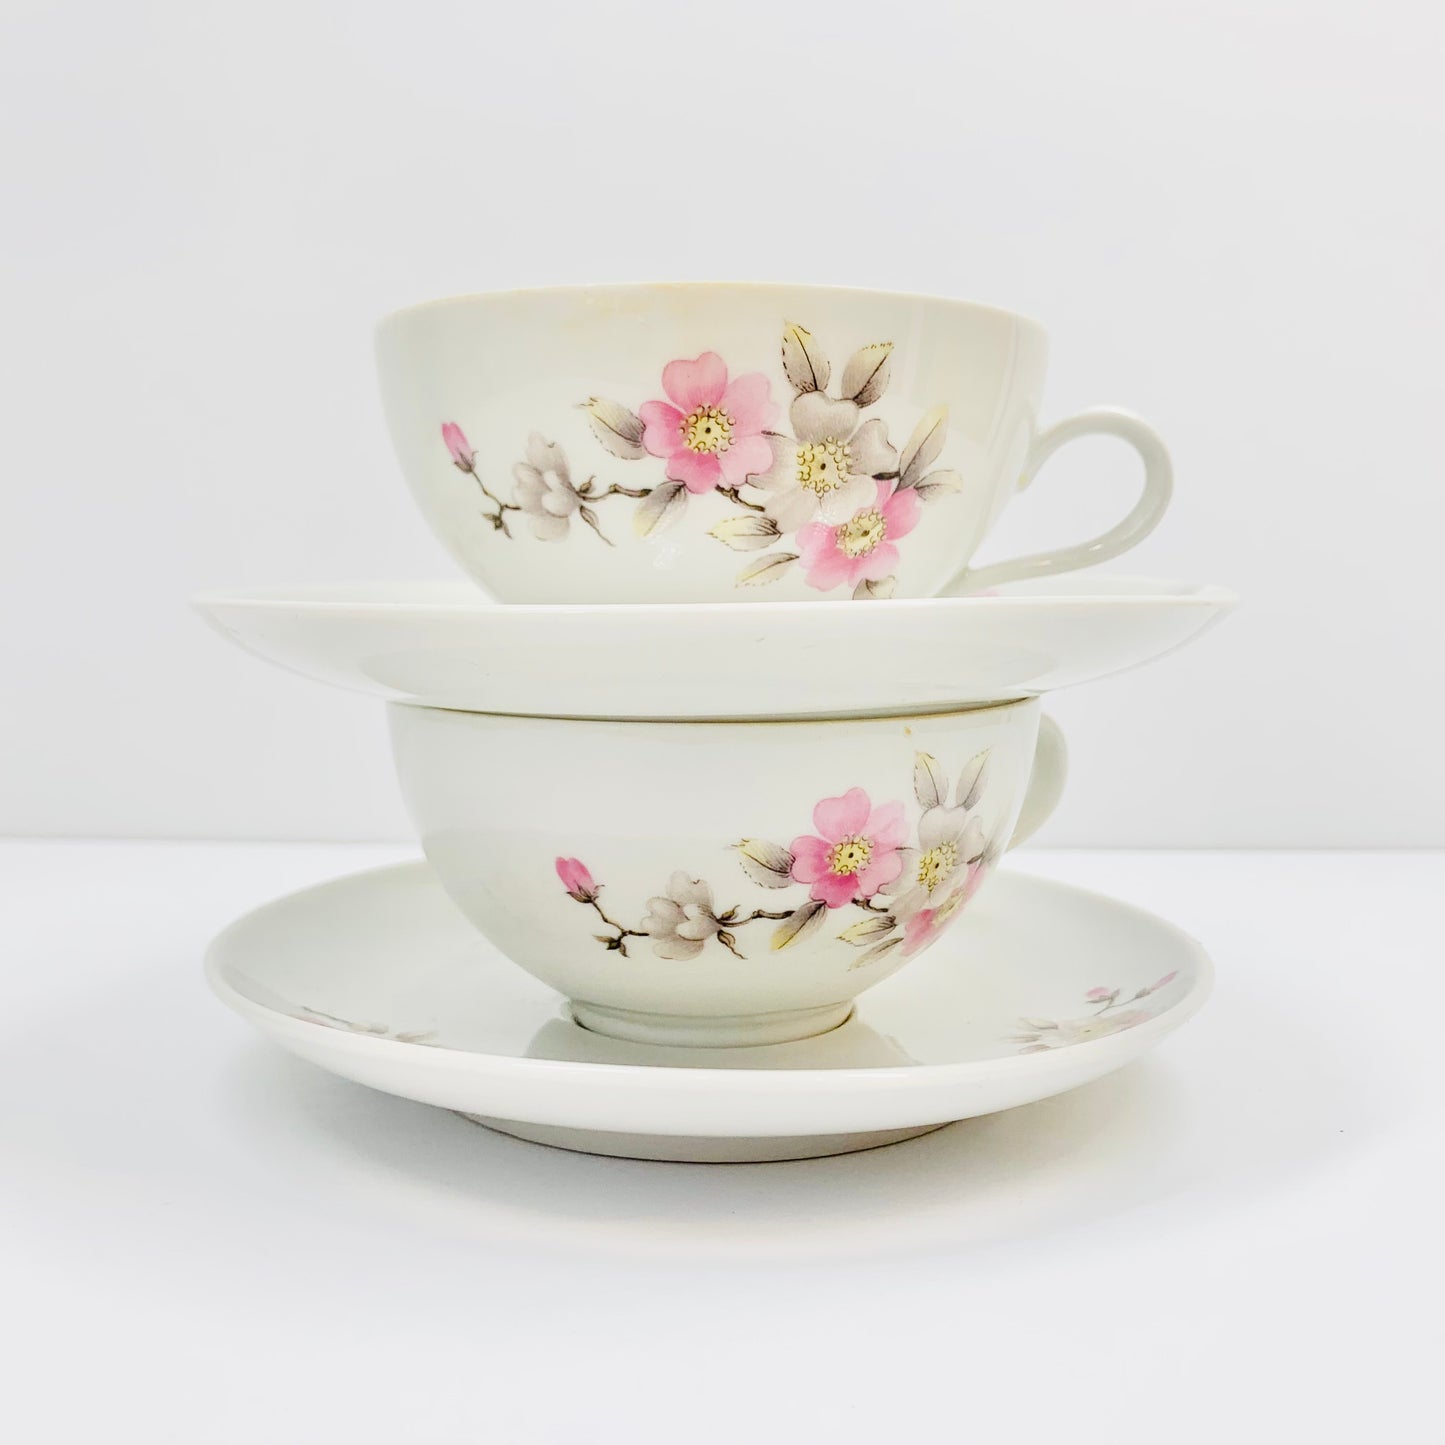 West German porcelain tea cup and matching saucer